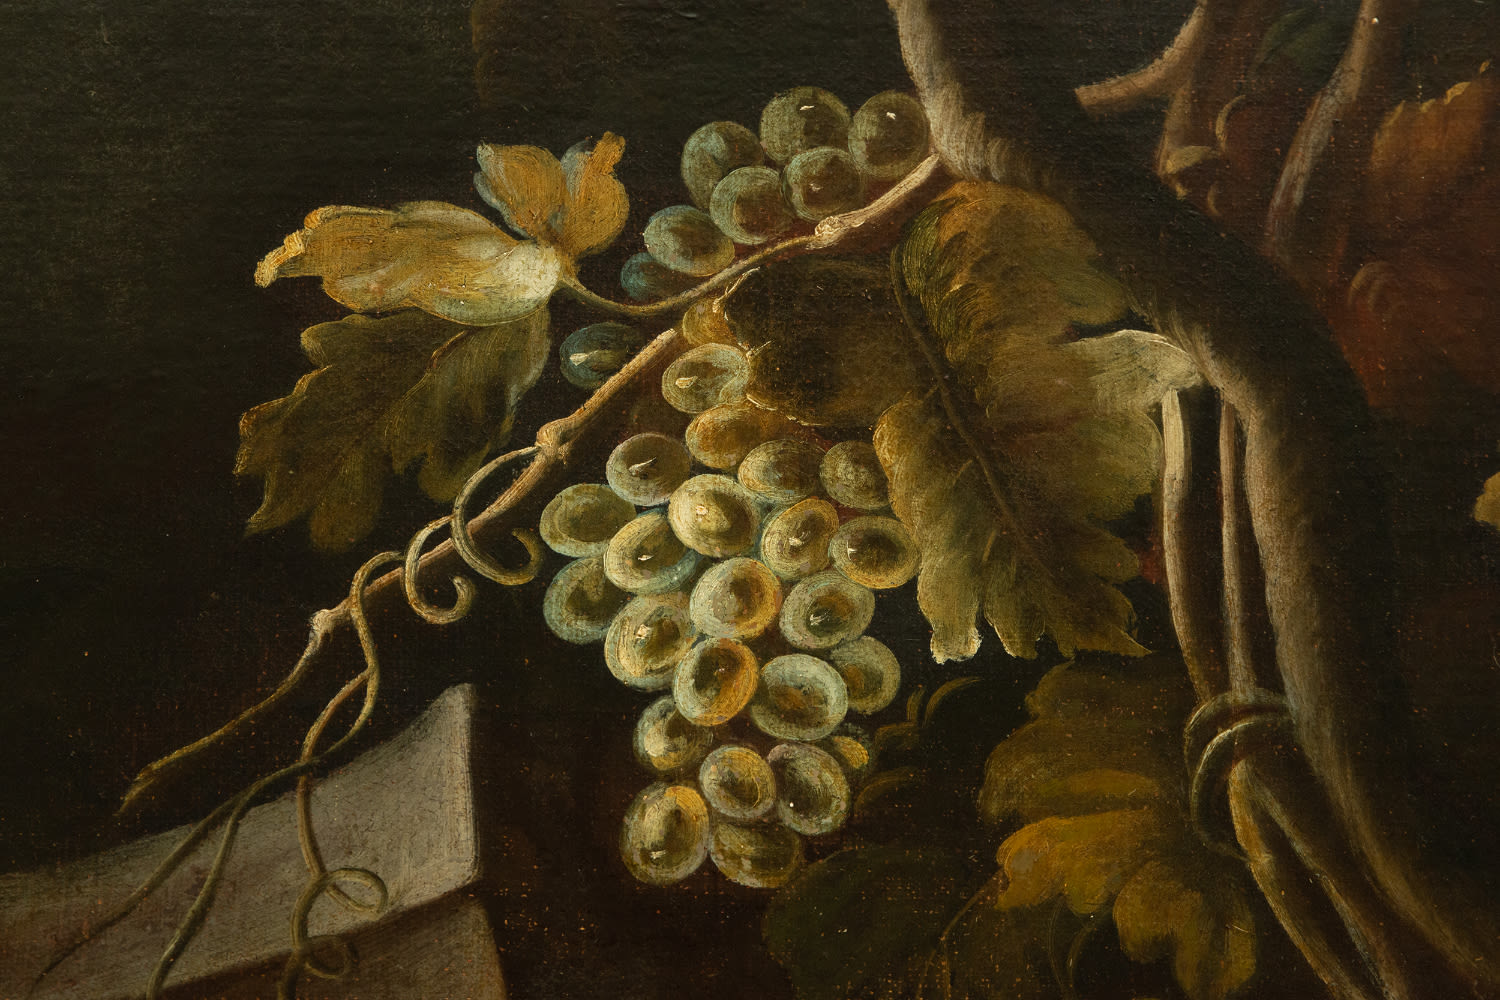 Nicola Casissa, "Still Life with Flowers and Dog", 17th century Italian school - Image 6 of 8